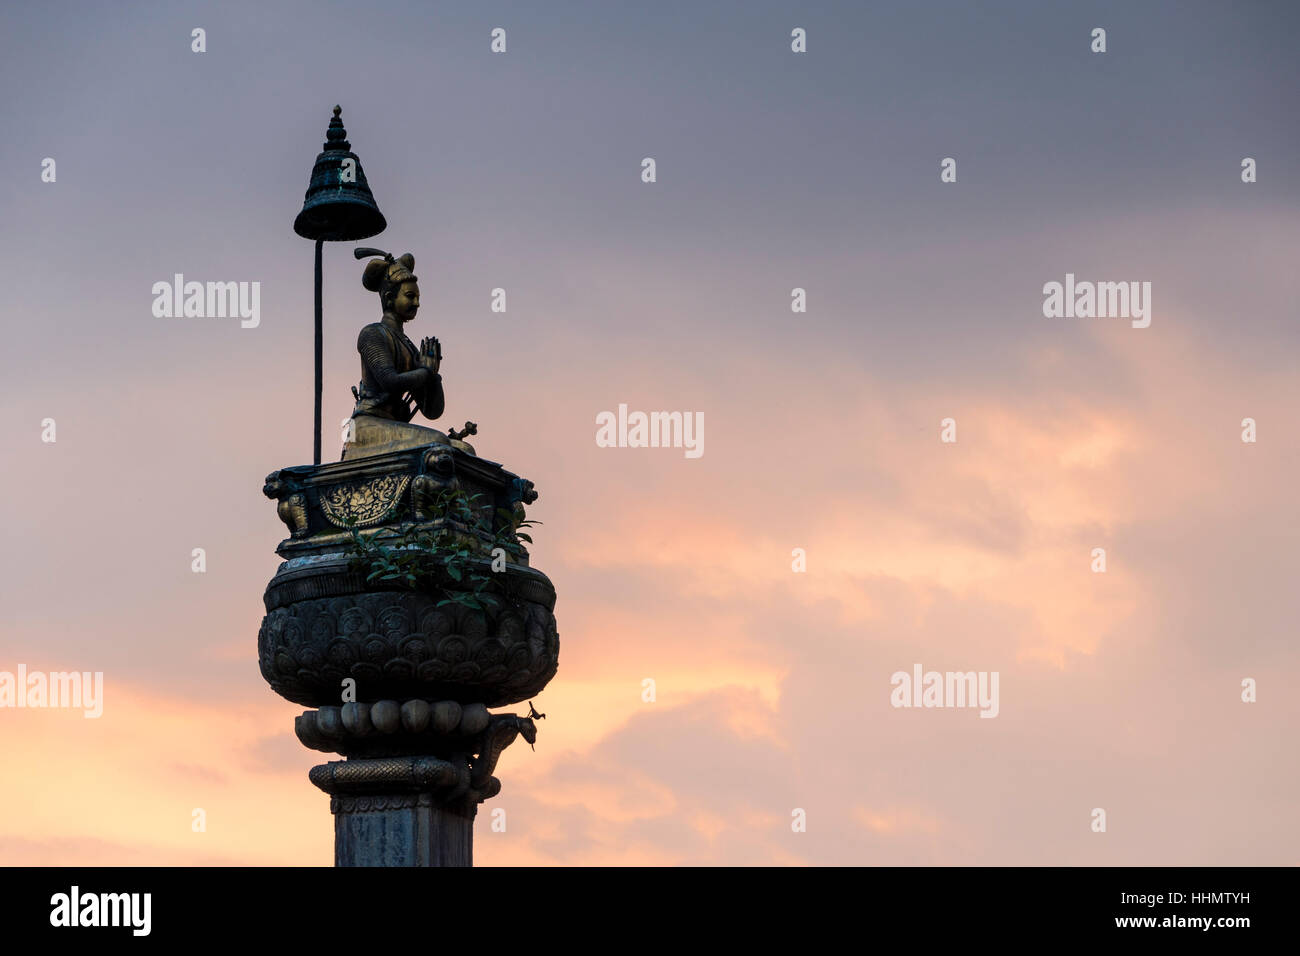 King's Statue Pillar at sunset, Durbar Square, Bhaktapur, Bhaktapur District, Nepal Stock Photo